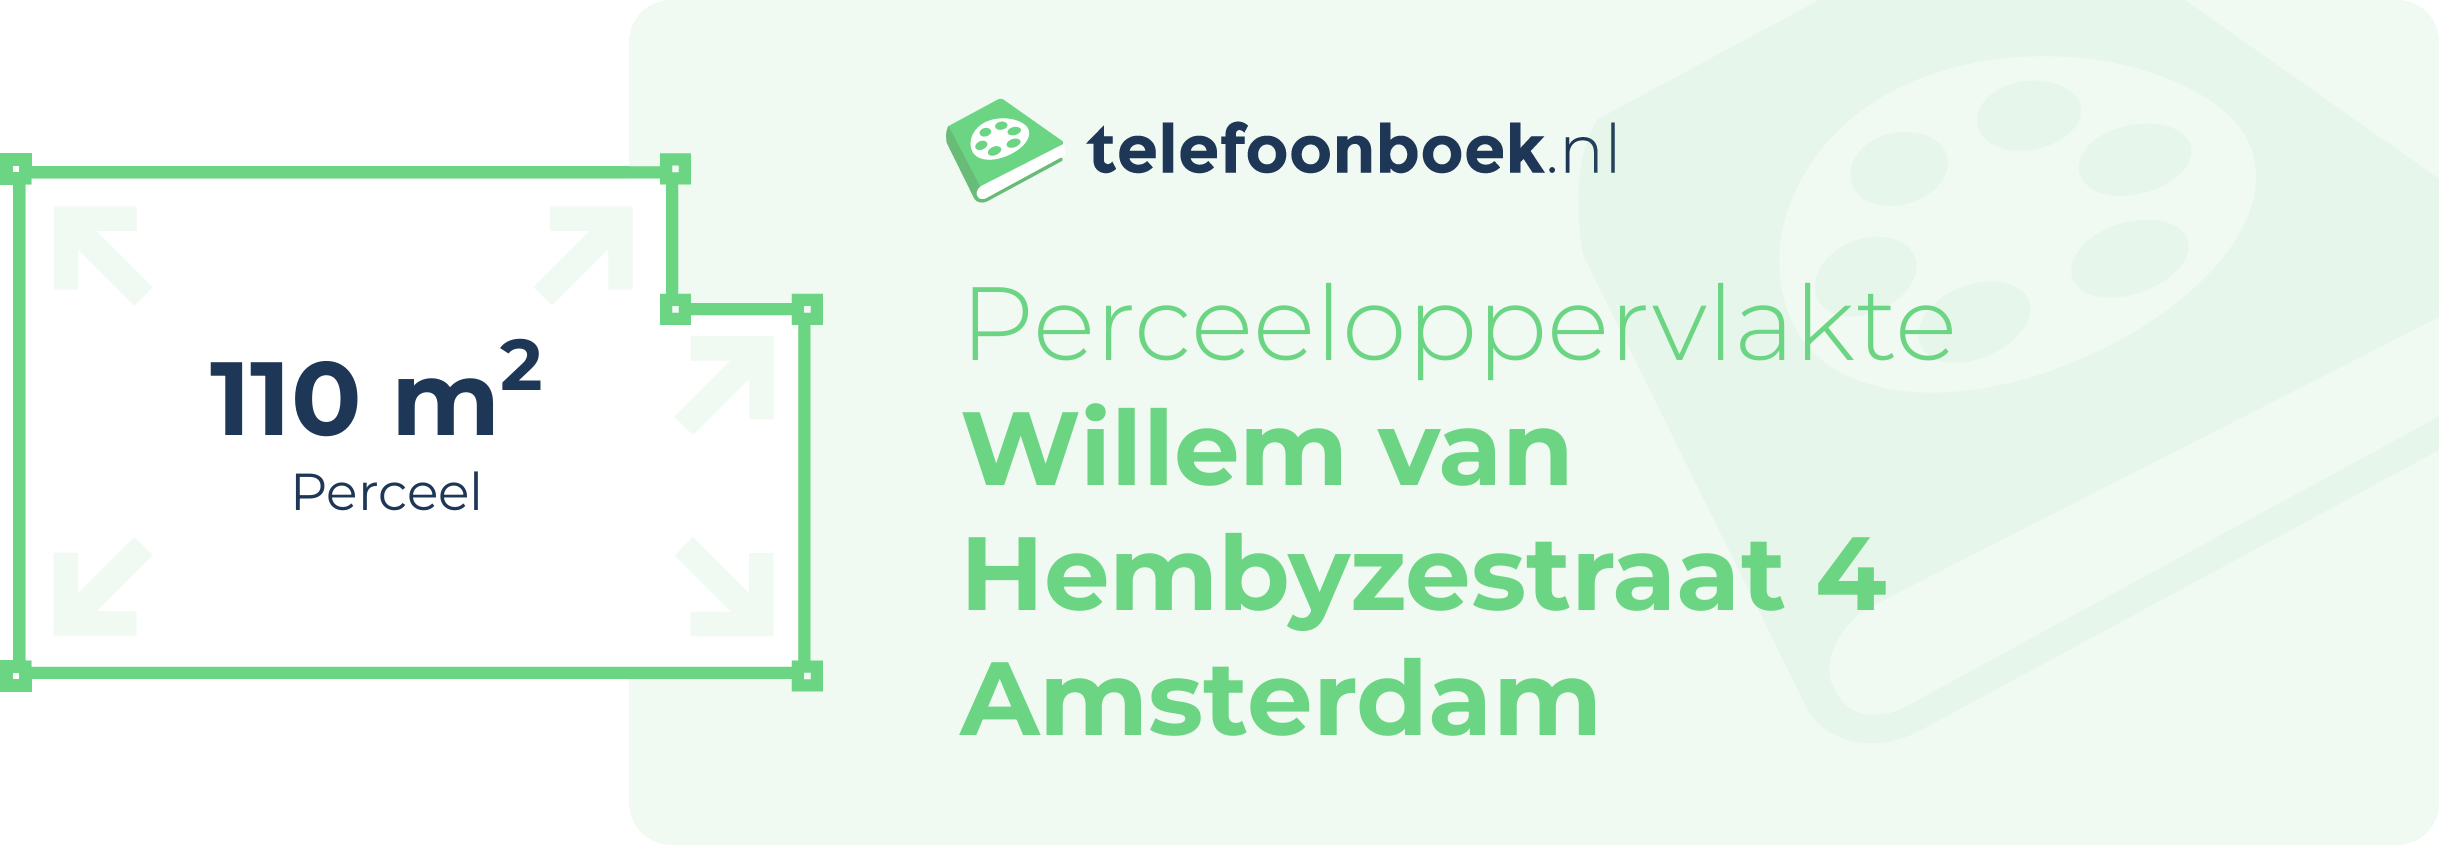 Perceeloppervlakte Willem Van Hembyzestraat 4 Amsterdam